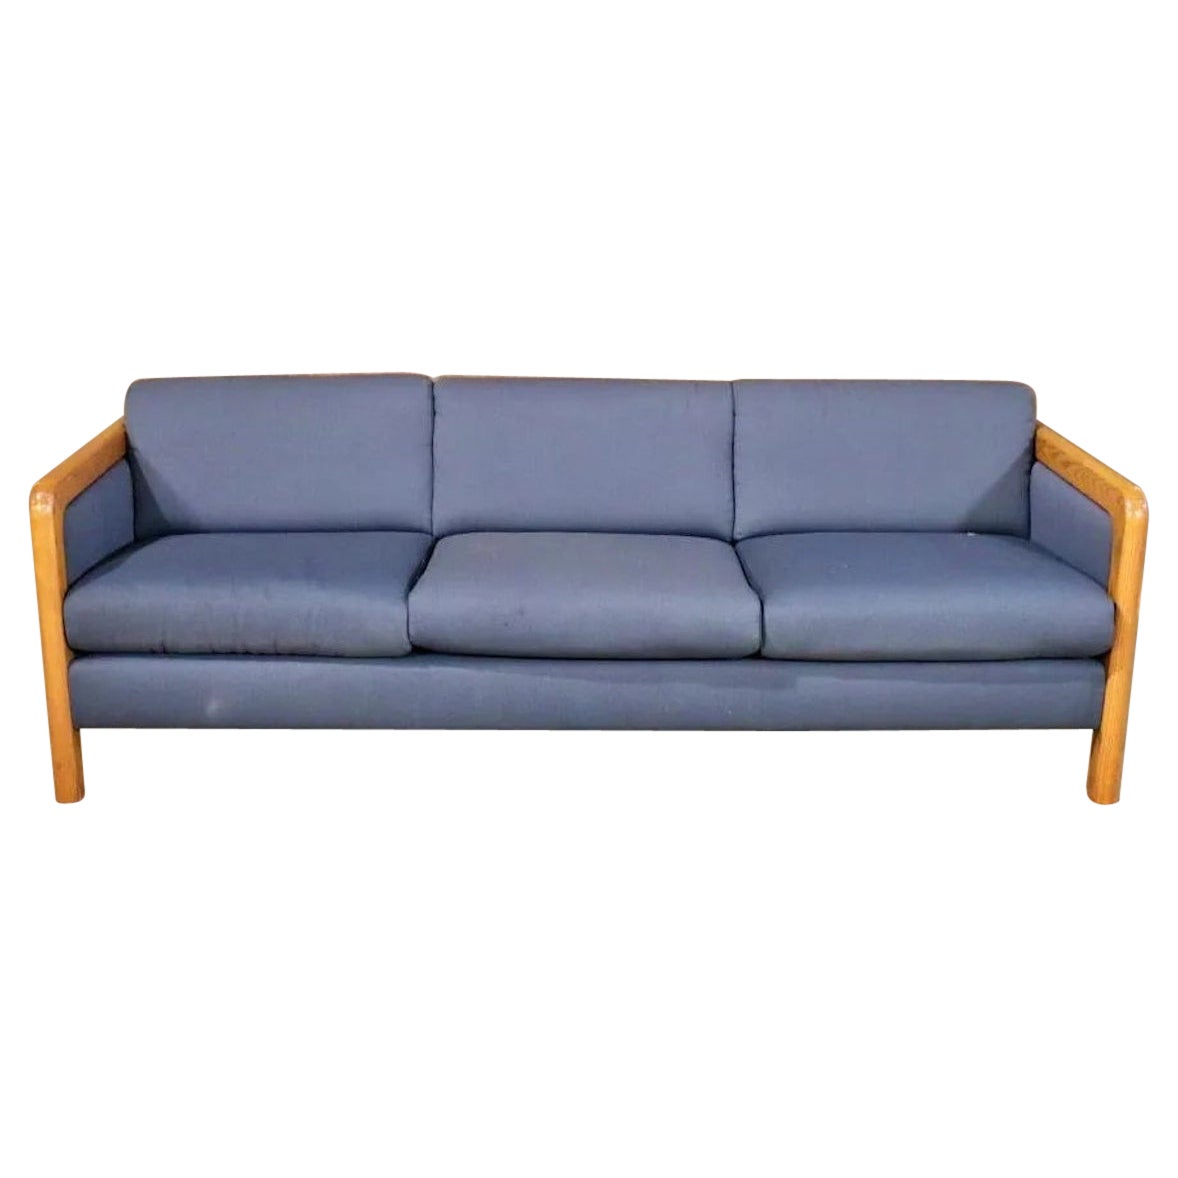 Mid-Century Modern Sofa For Sale